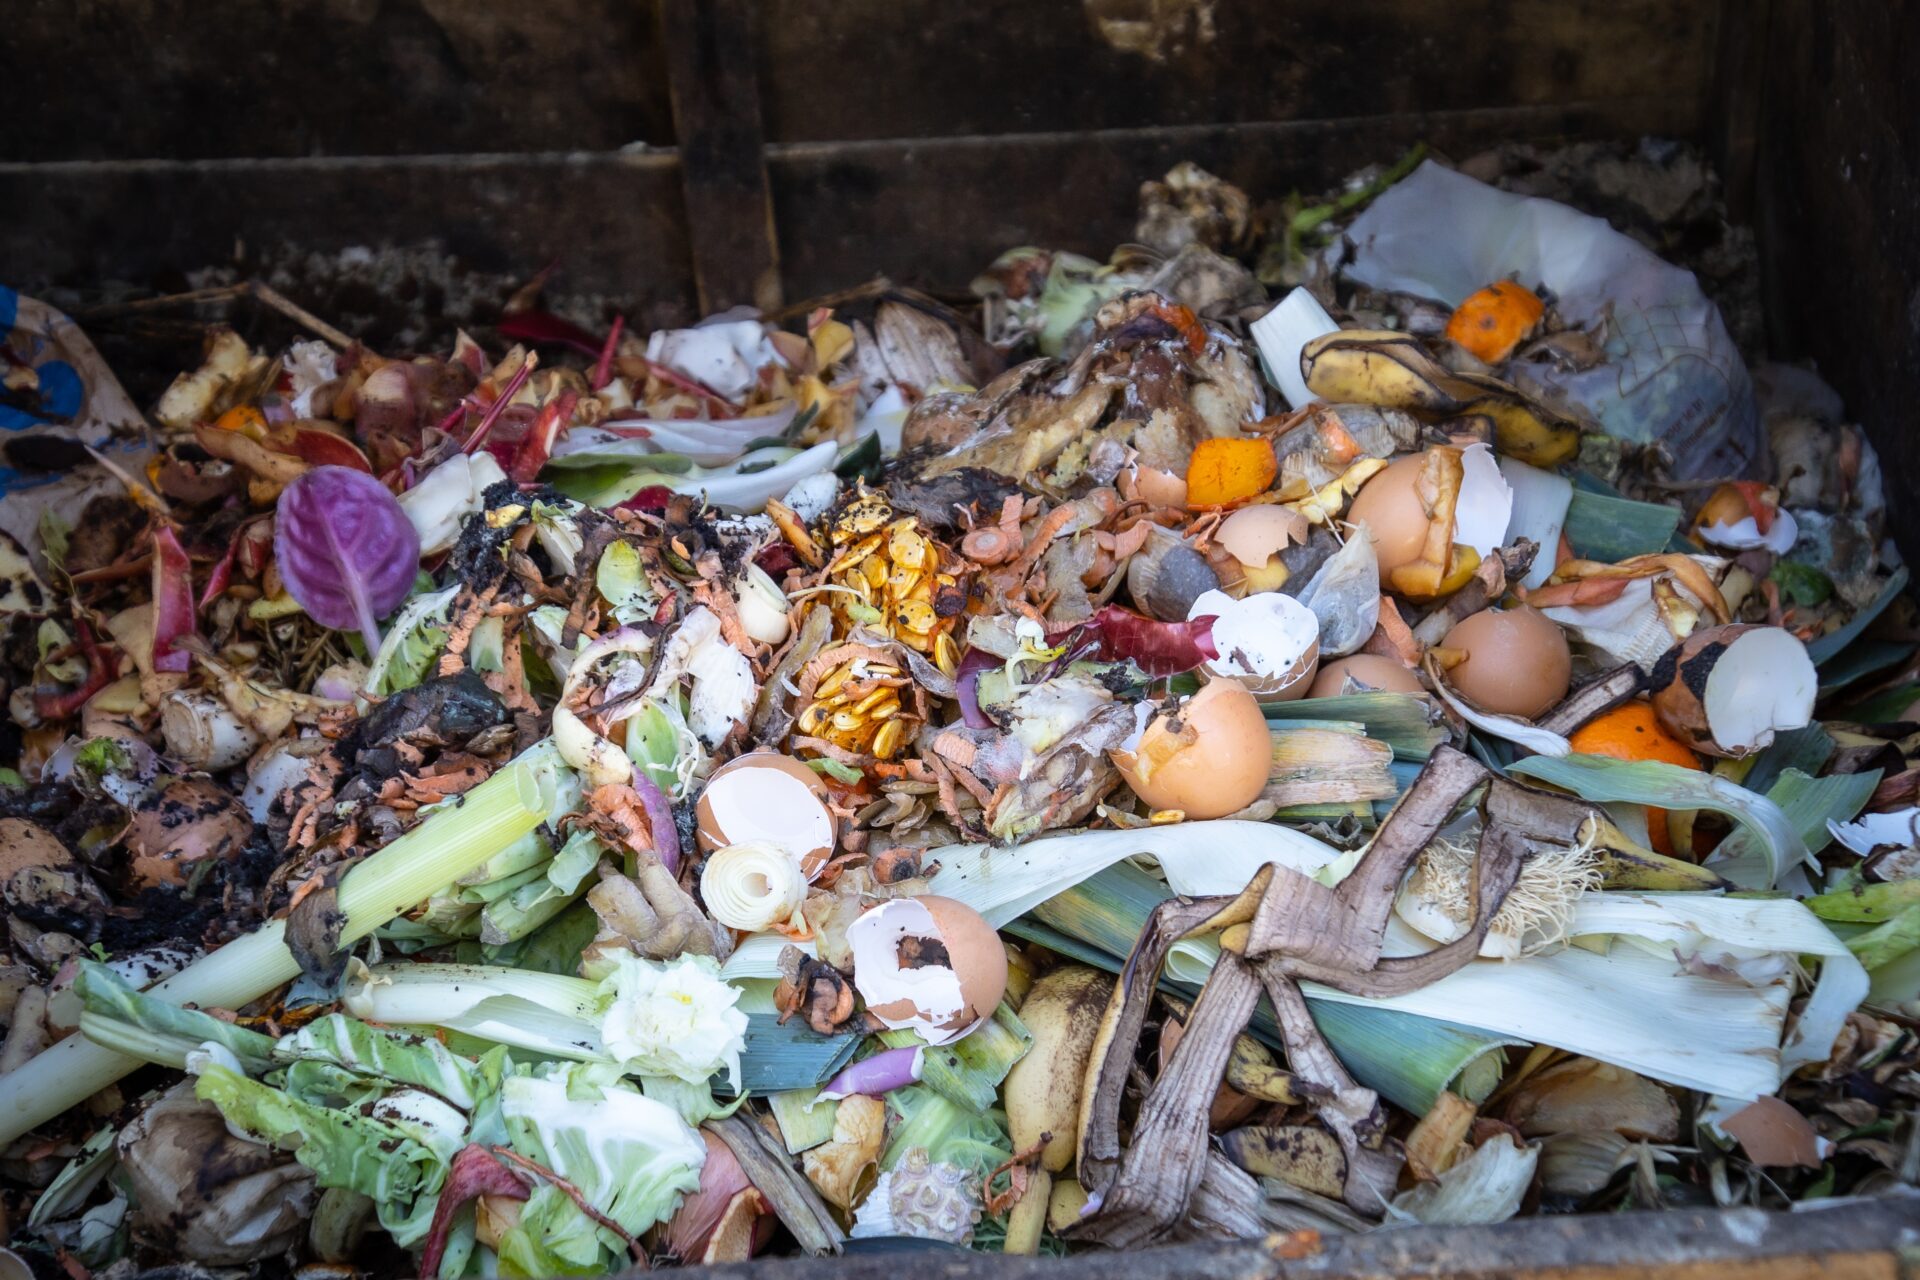 Bin of food scraps for composting.